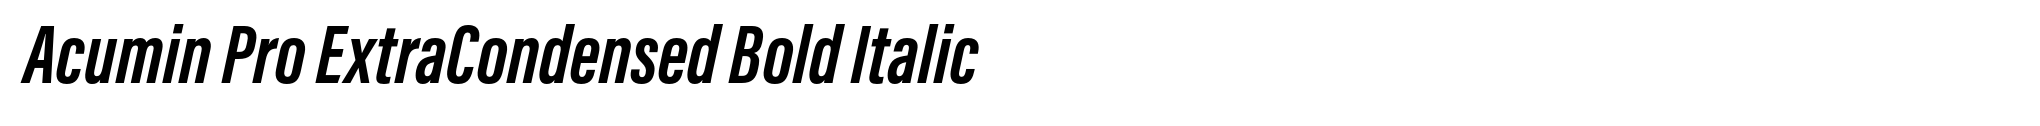 Acumin Pro ExtraCondensed Bold Italic image